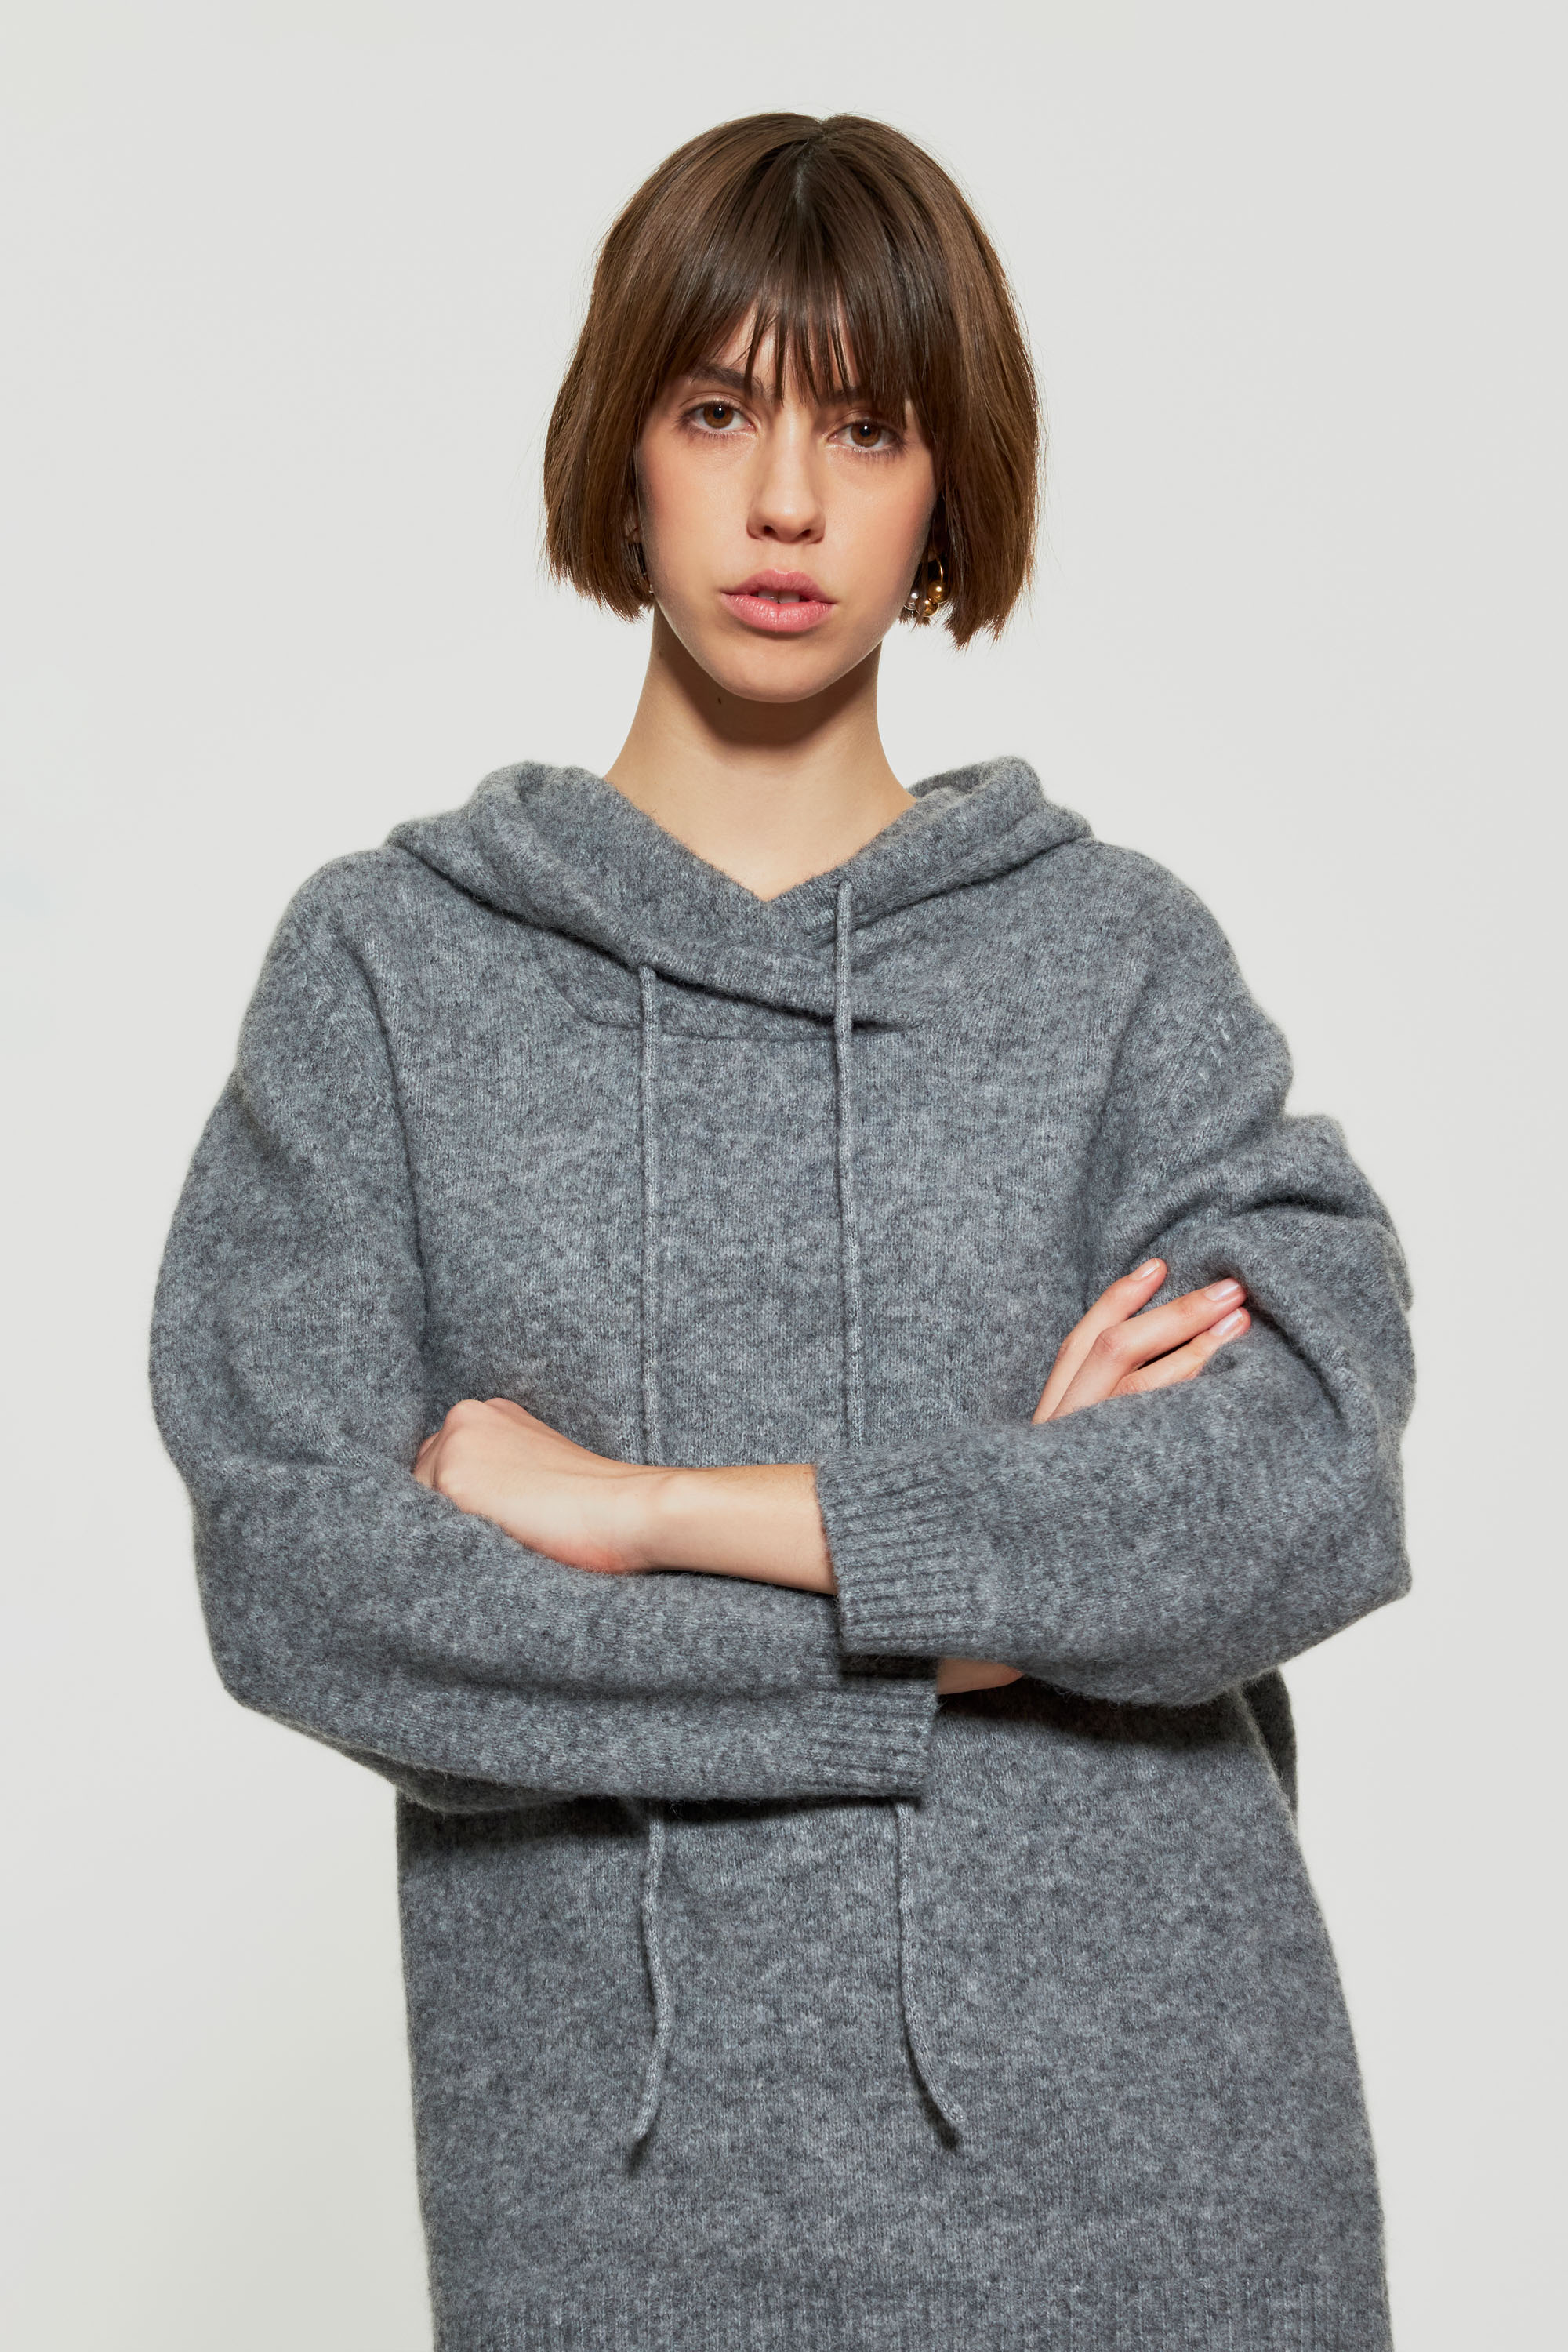 Wool hoody | Cream/white hooded sweatshirt | ANTIK BATIK